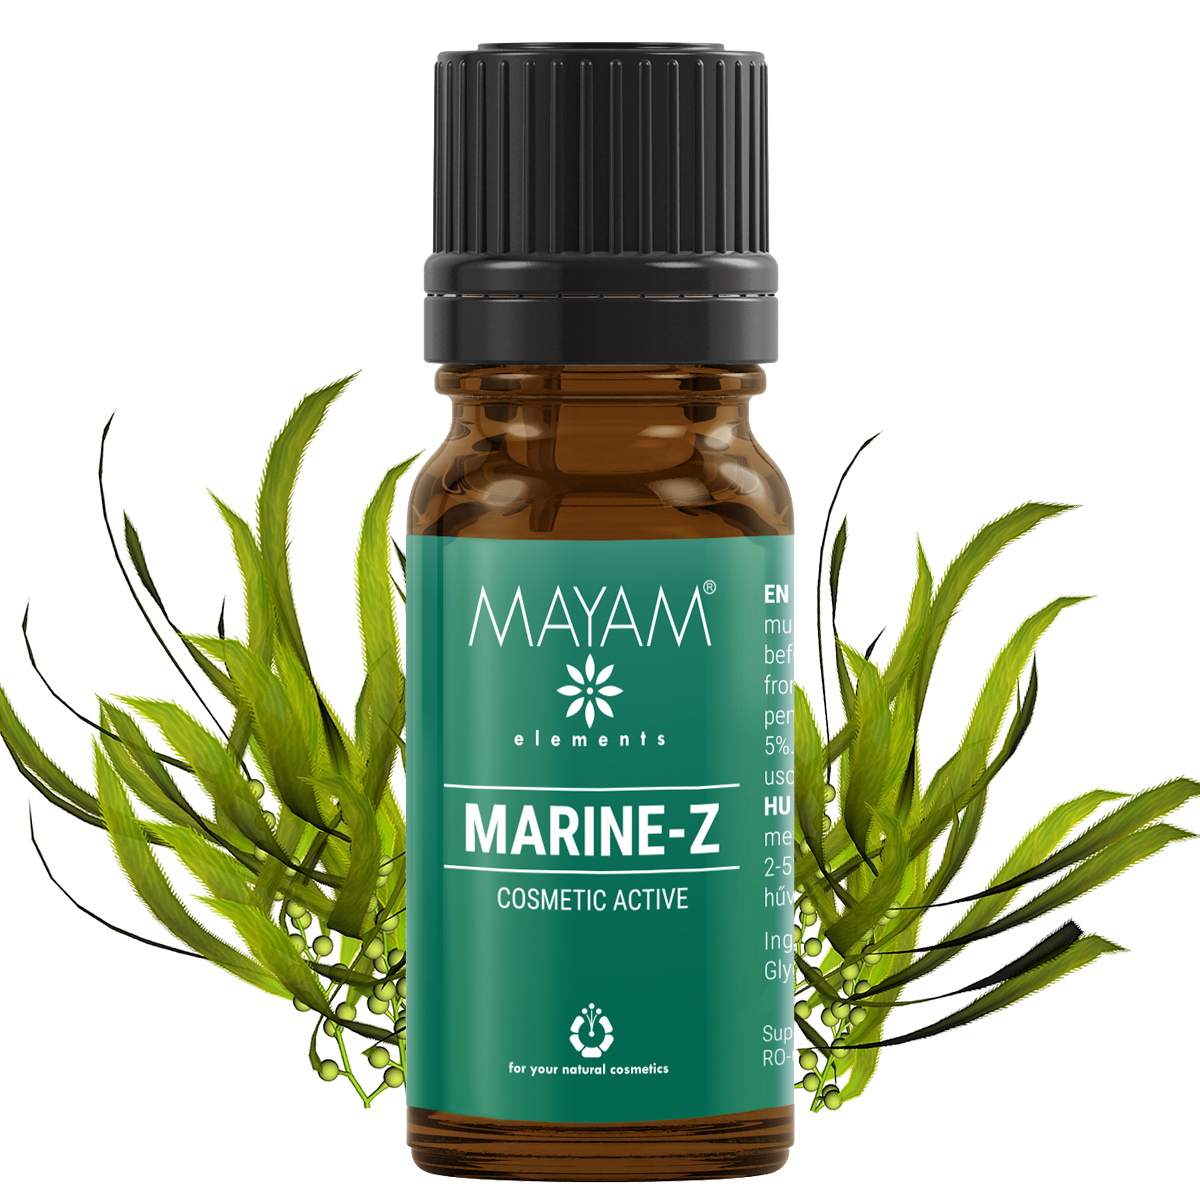 Activ cosmetic Marine-Z, M-1280, 10 ml, Mayam